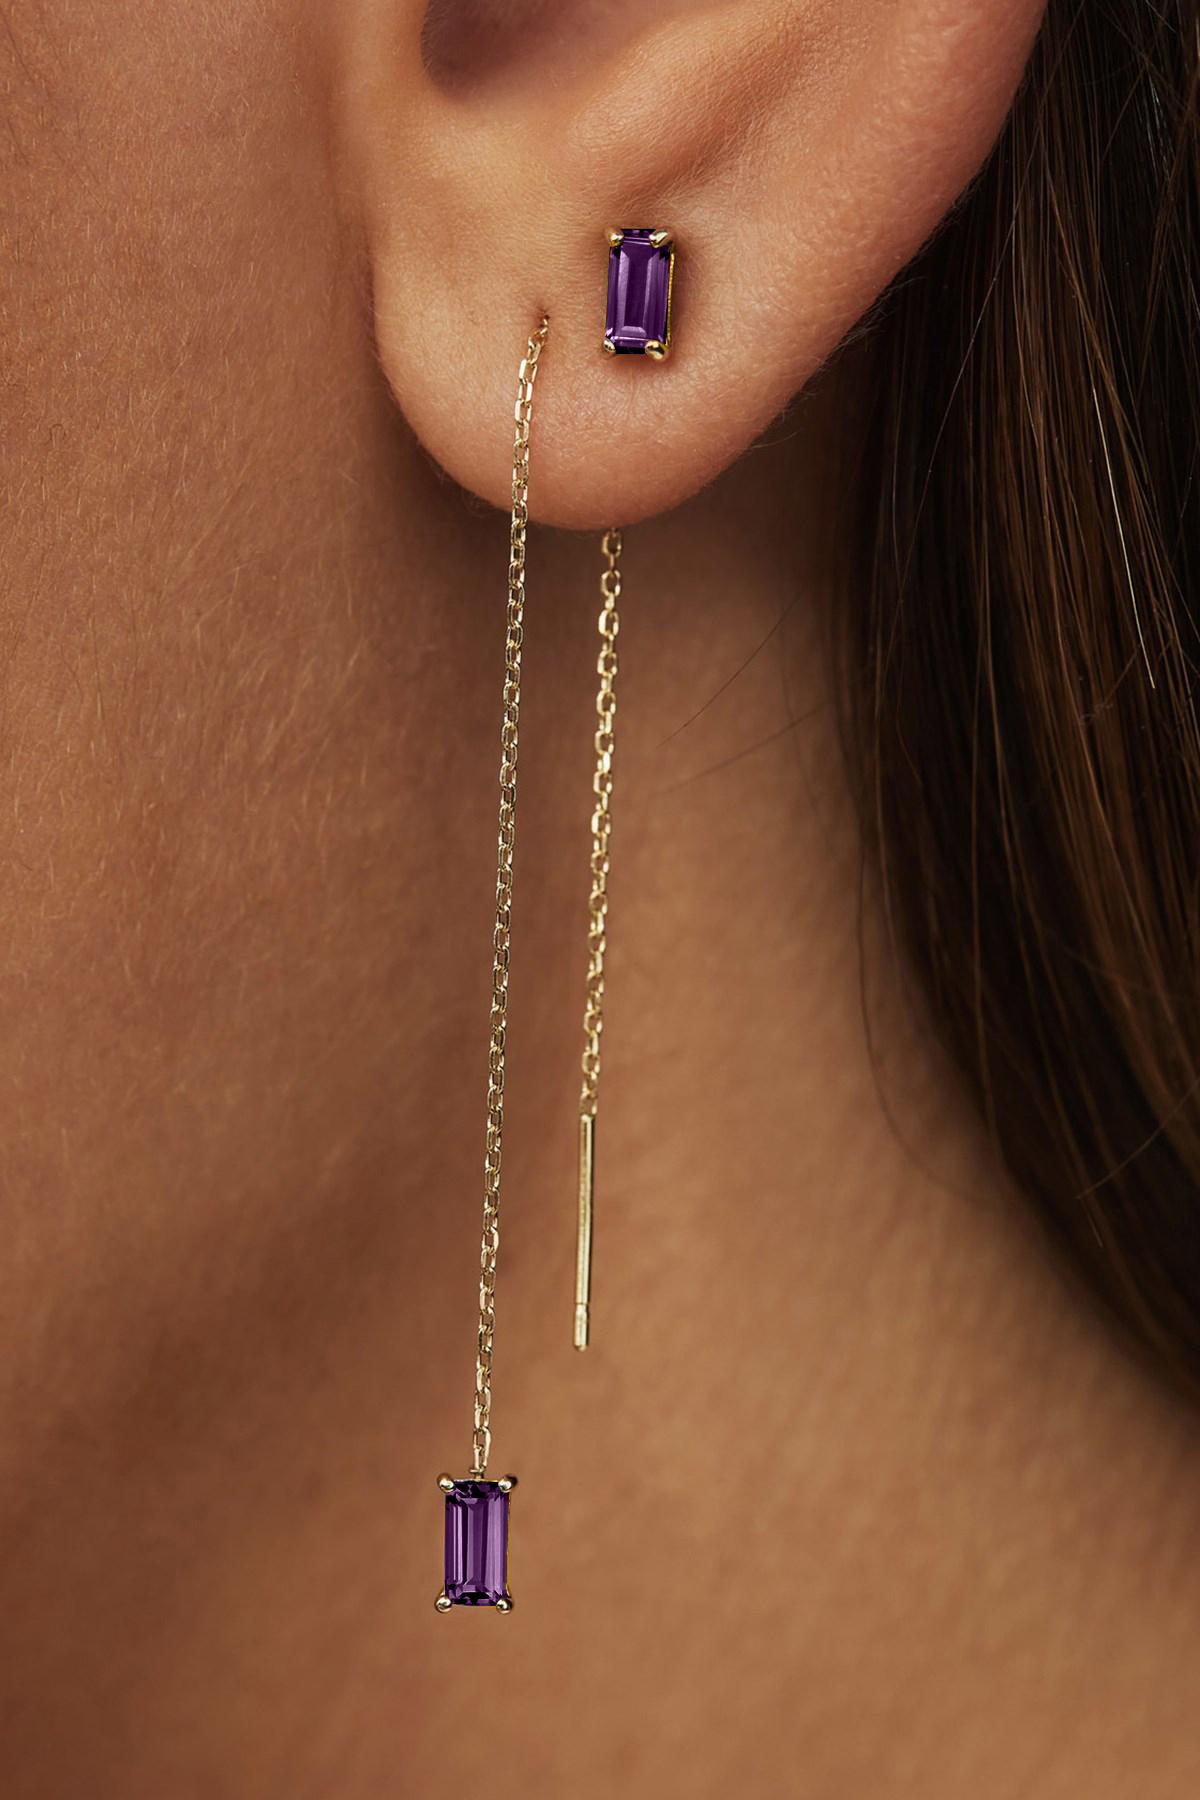 Women's 14k Solid Gold Drop Earrings with amethyst.  For Sale